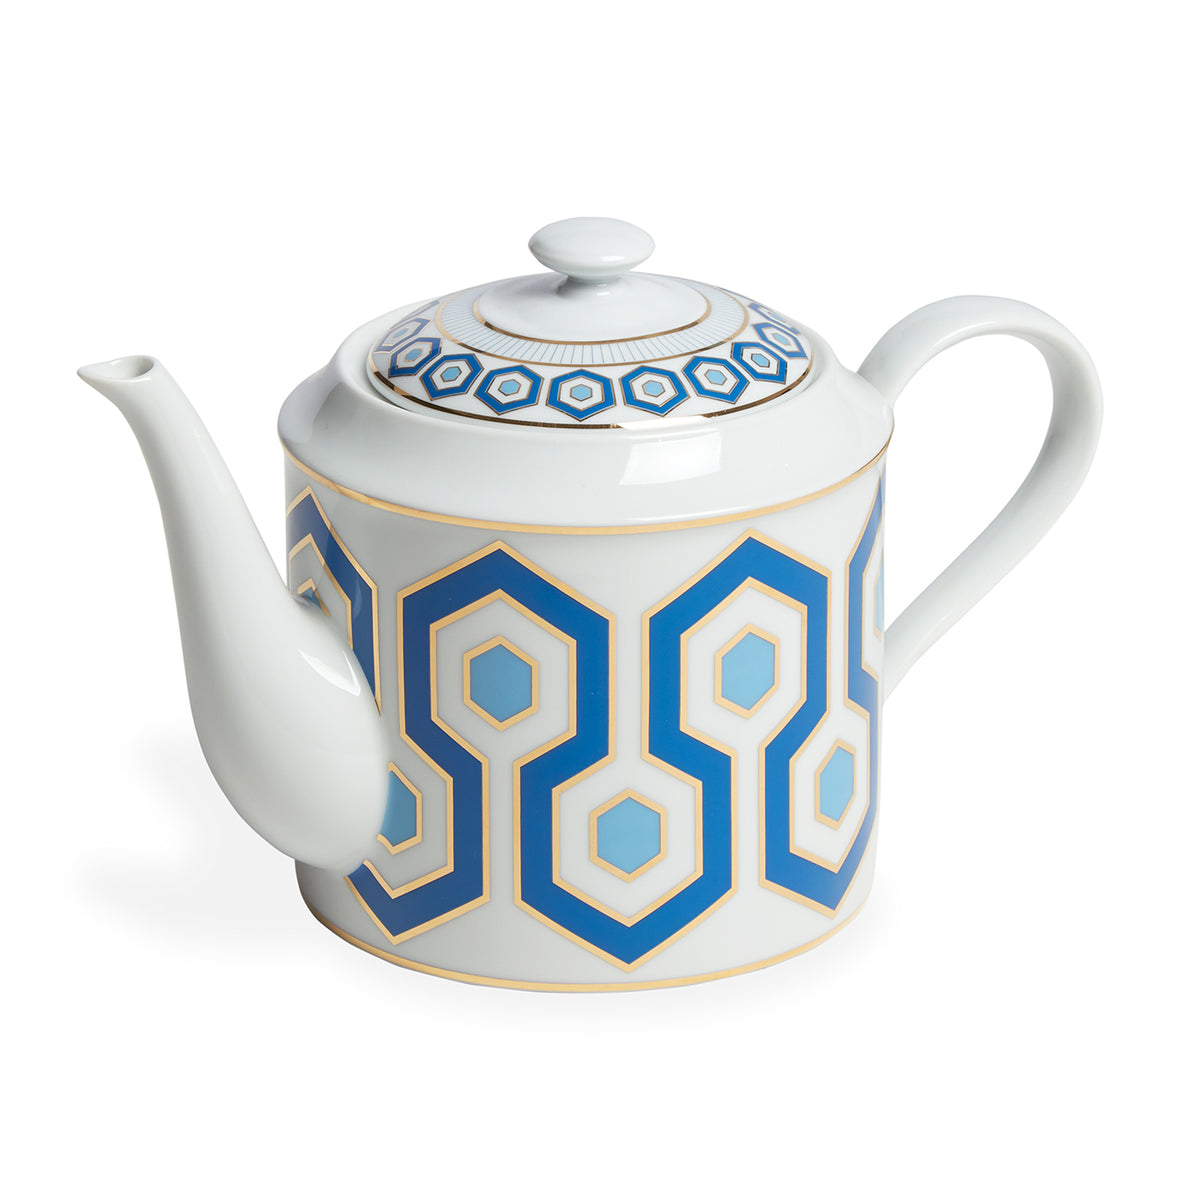 Newport Teapot by Jonathan Adler